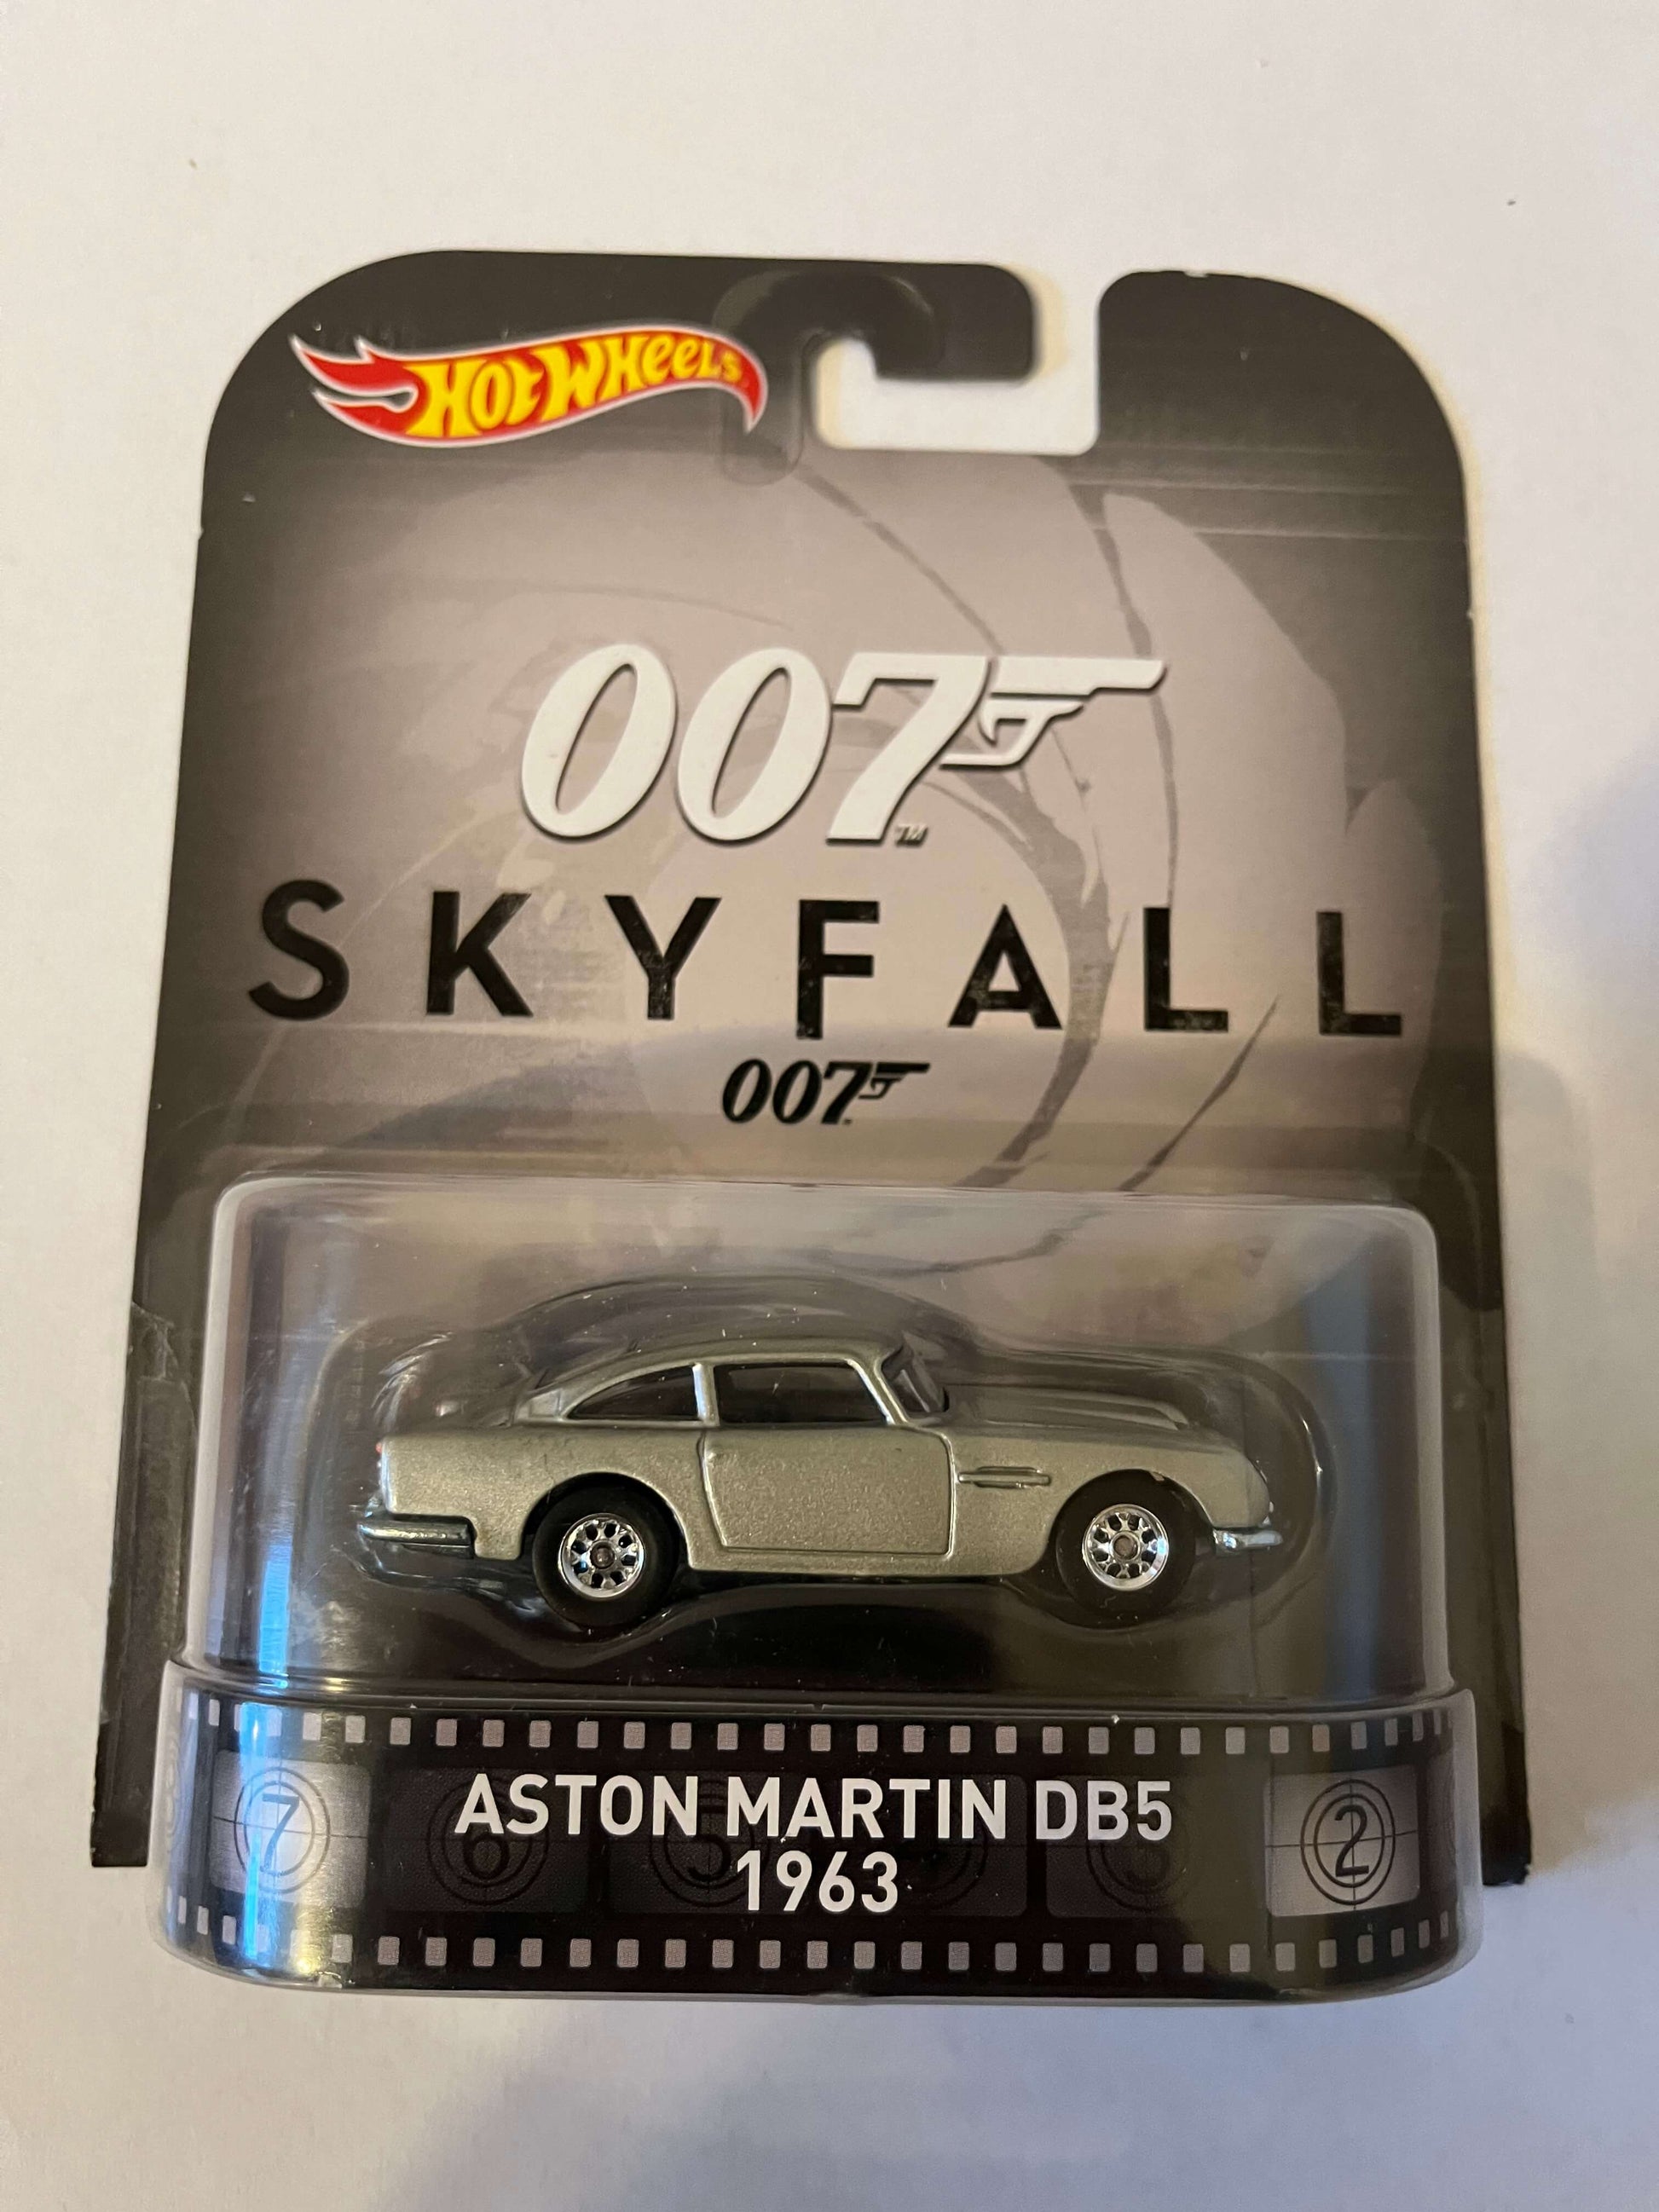 Aston Martin Diecast Collectibles